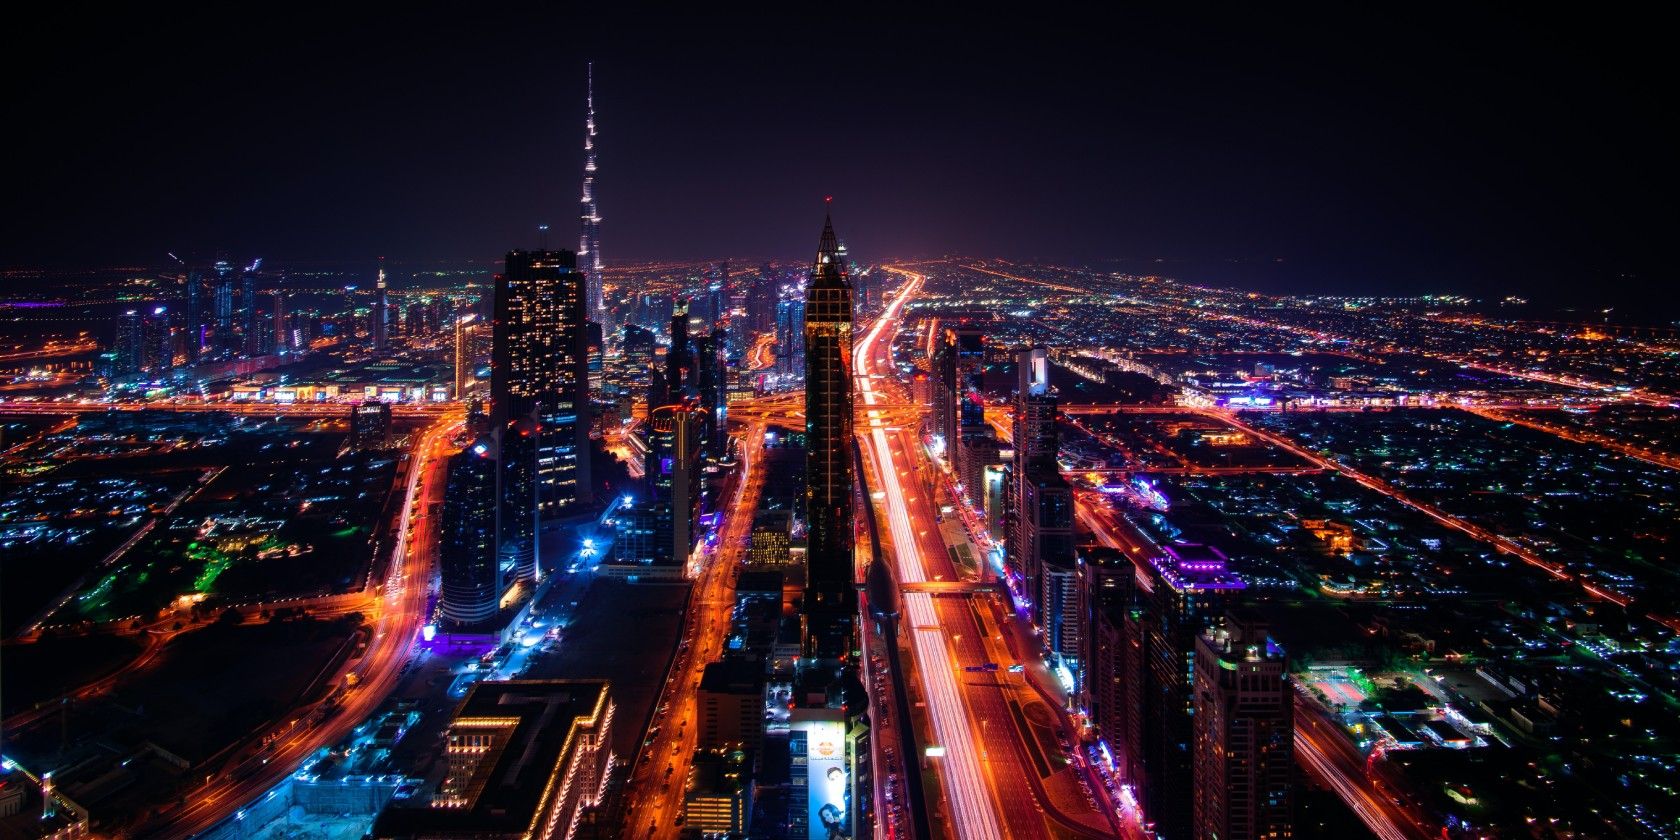 An aerial photograph of Dubai at night